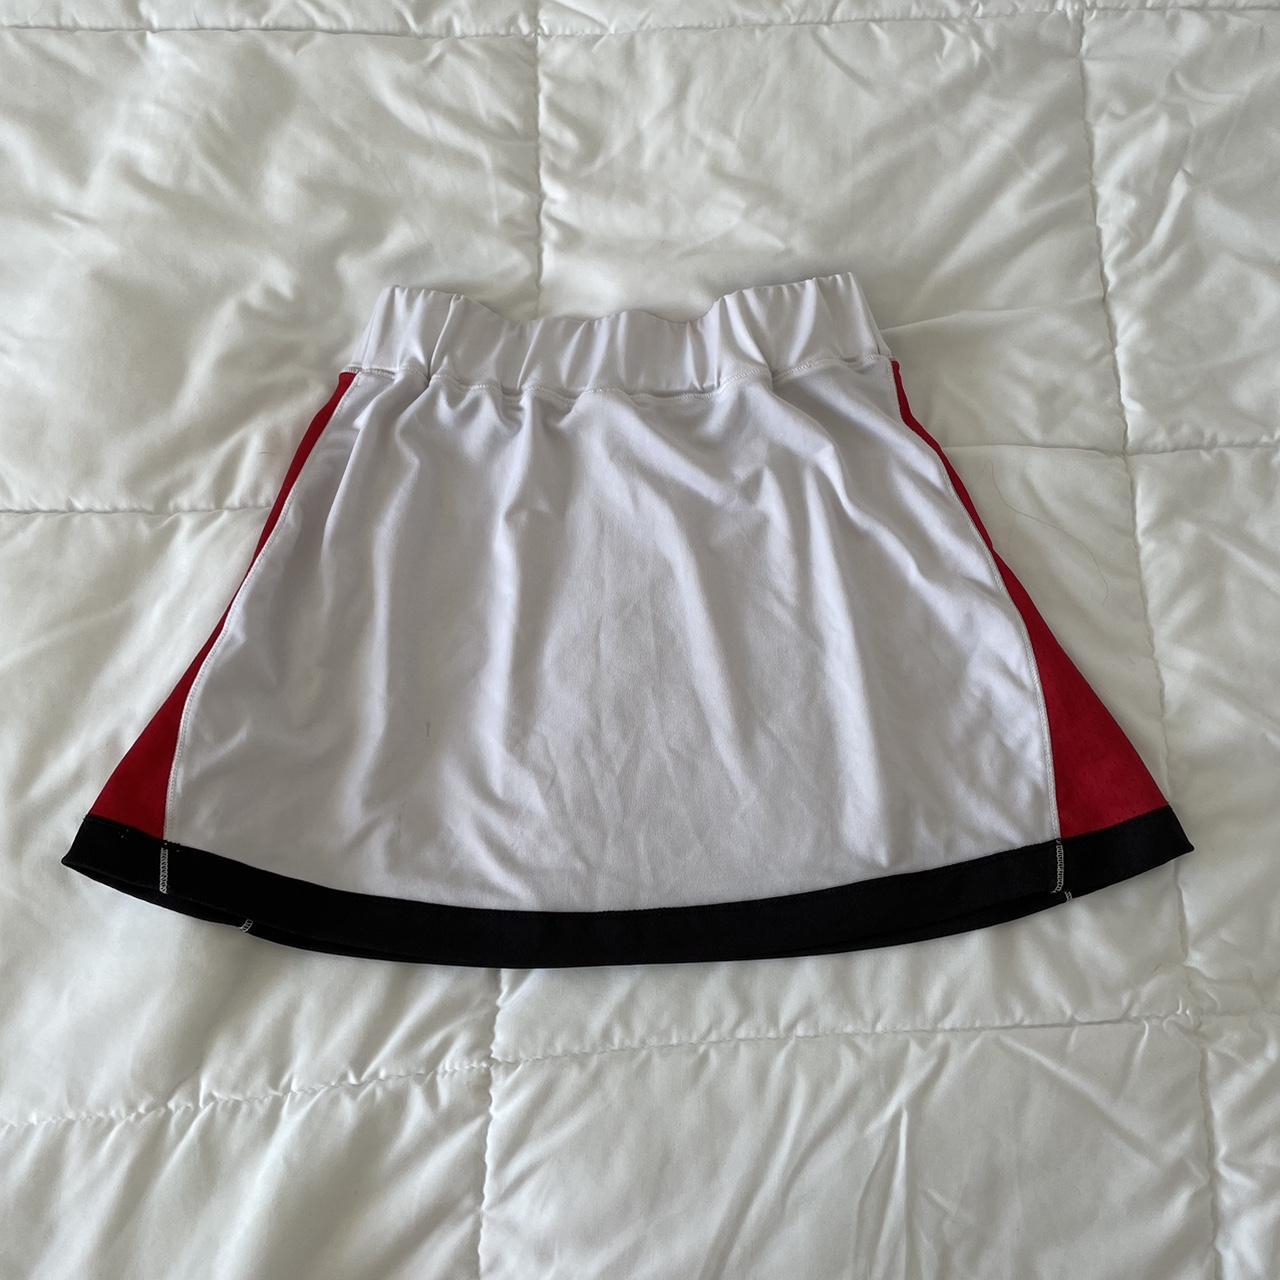 Adidas Women's Red and White Skirt (4)